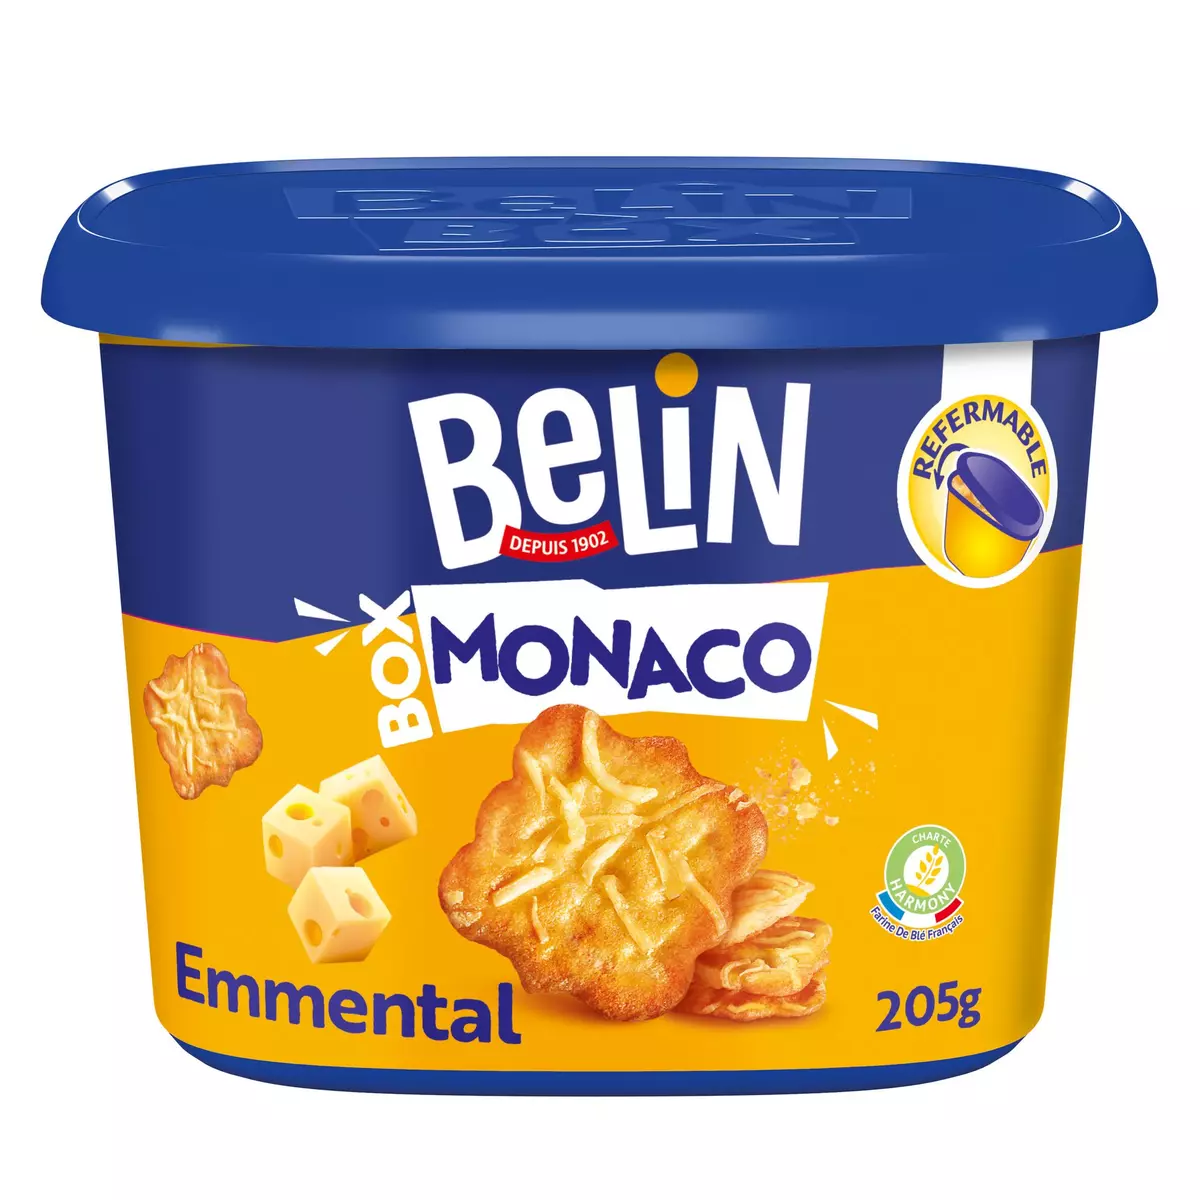 BELIN Biscuits crackers à l'emmental Box Monaco 205g